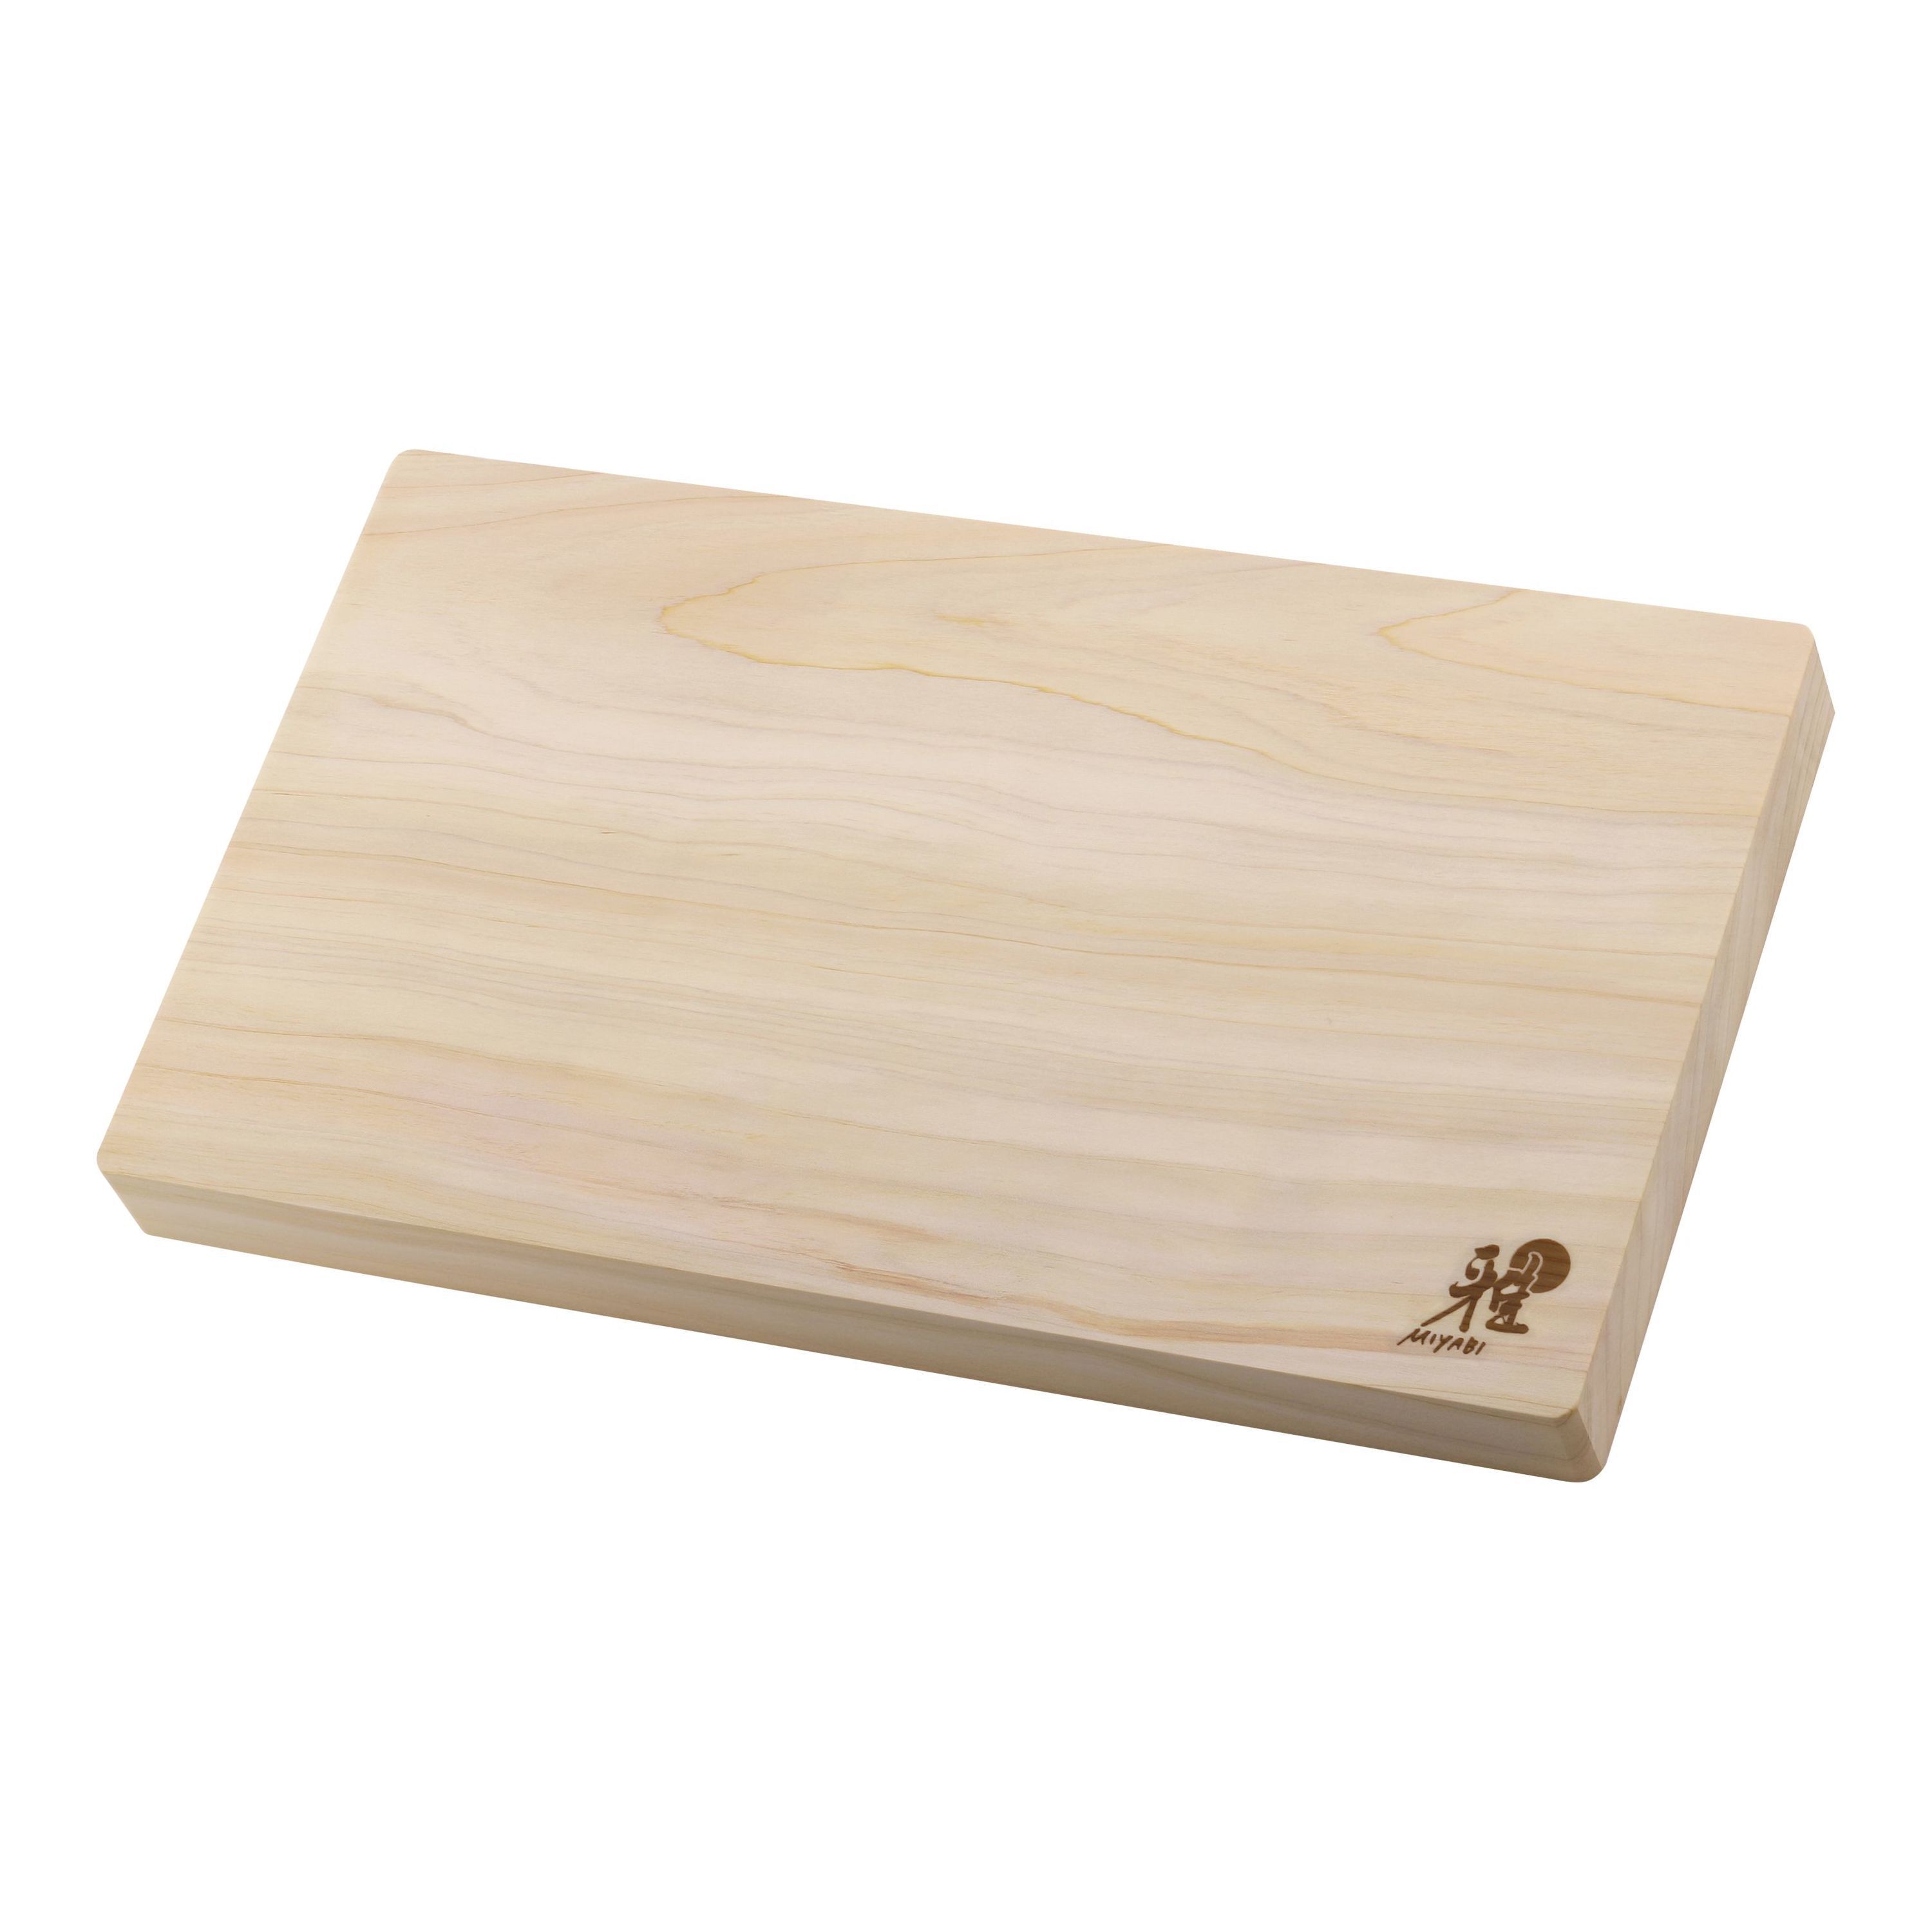 MIYABI Hinoki Cutting Boards Tagliere - 35 cm x 20 cm, marrone